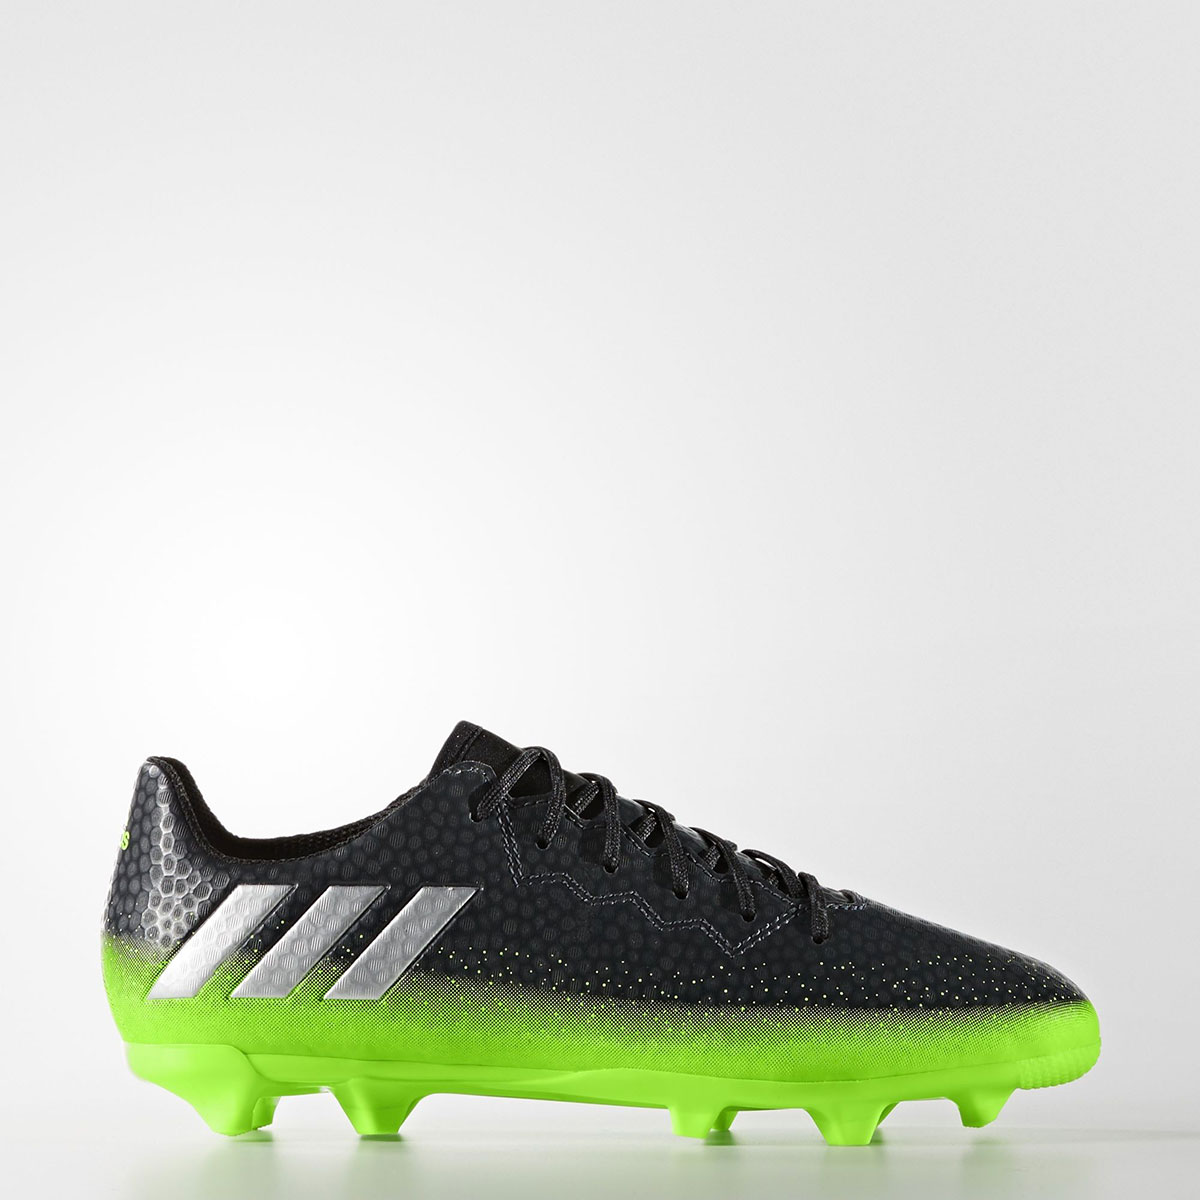 adidas Messi 16.3 FG J black/green  AQ3518